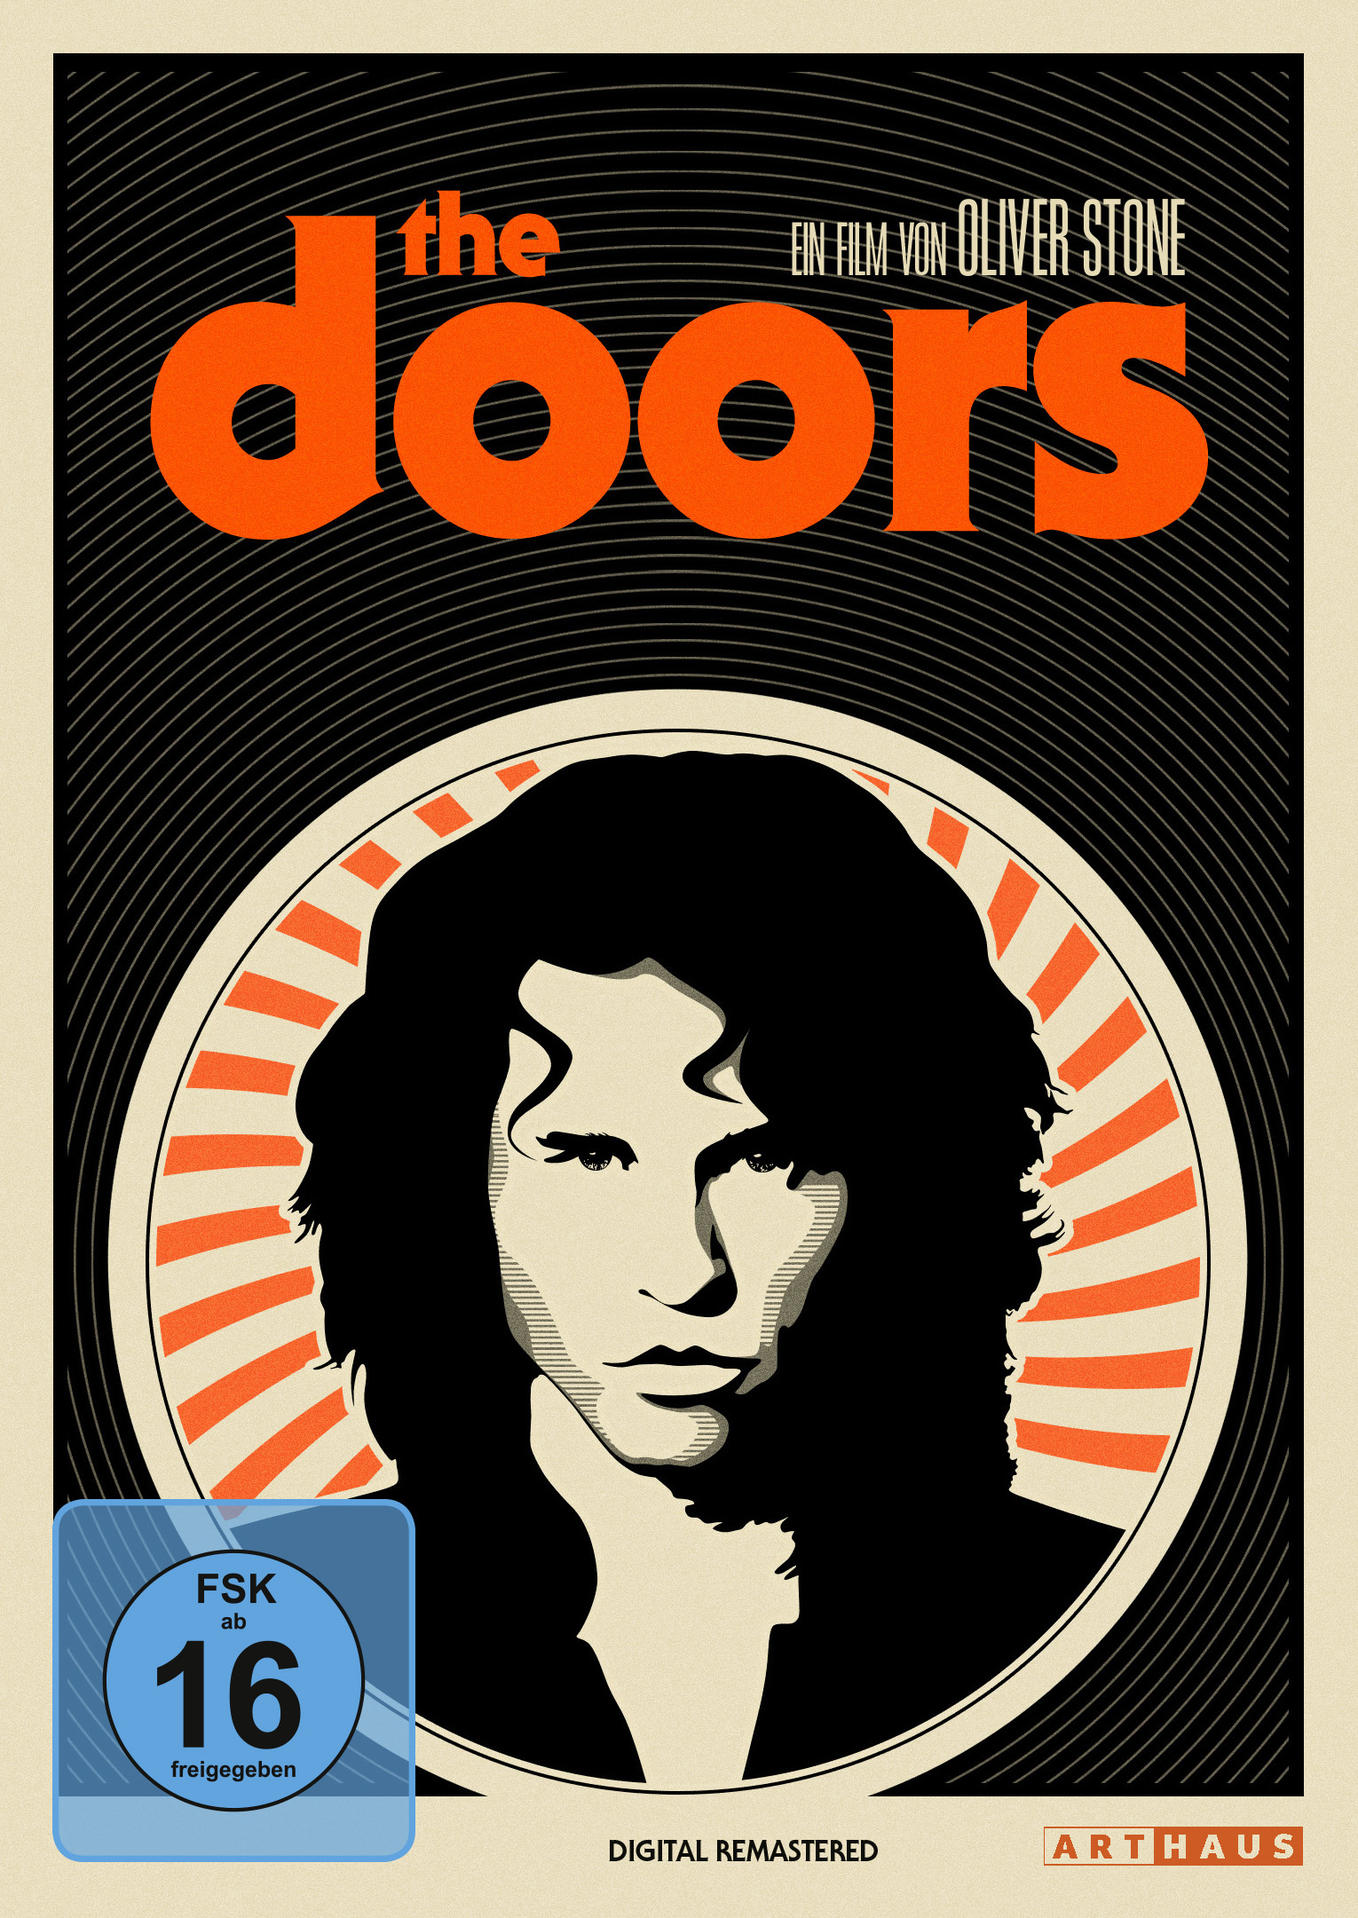 The (Digital Remastered) Doors DVD